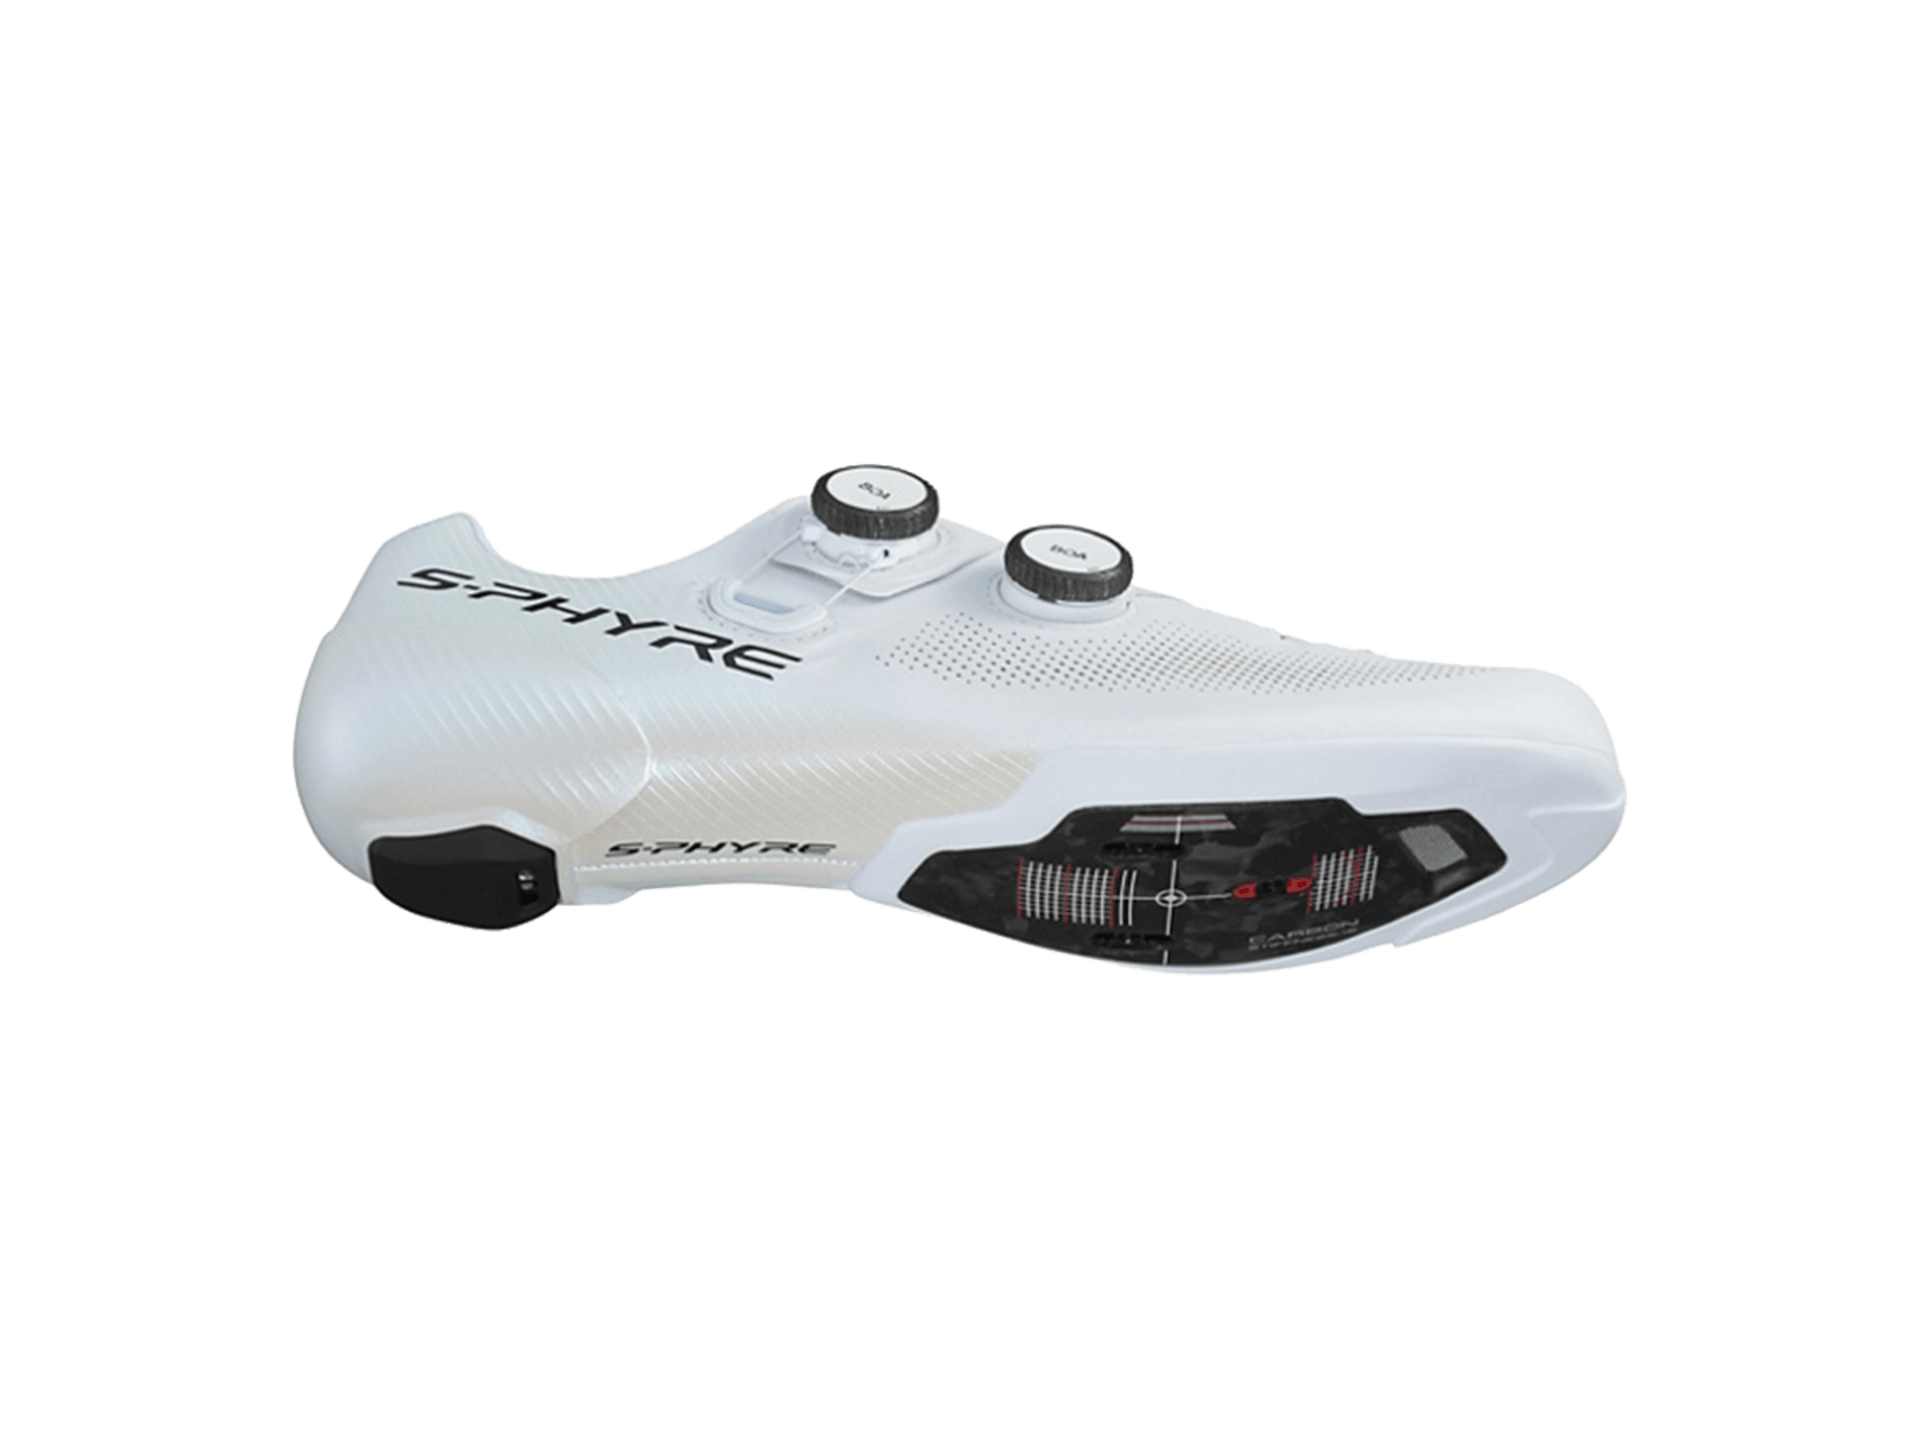 Shimano RC903 S-PHYRE Men's Road Cycling Shoe